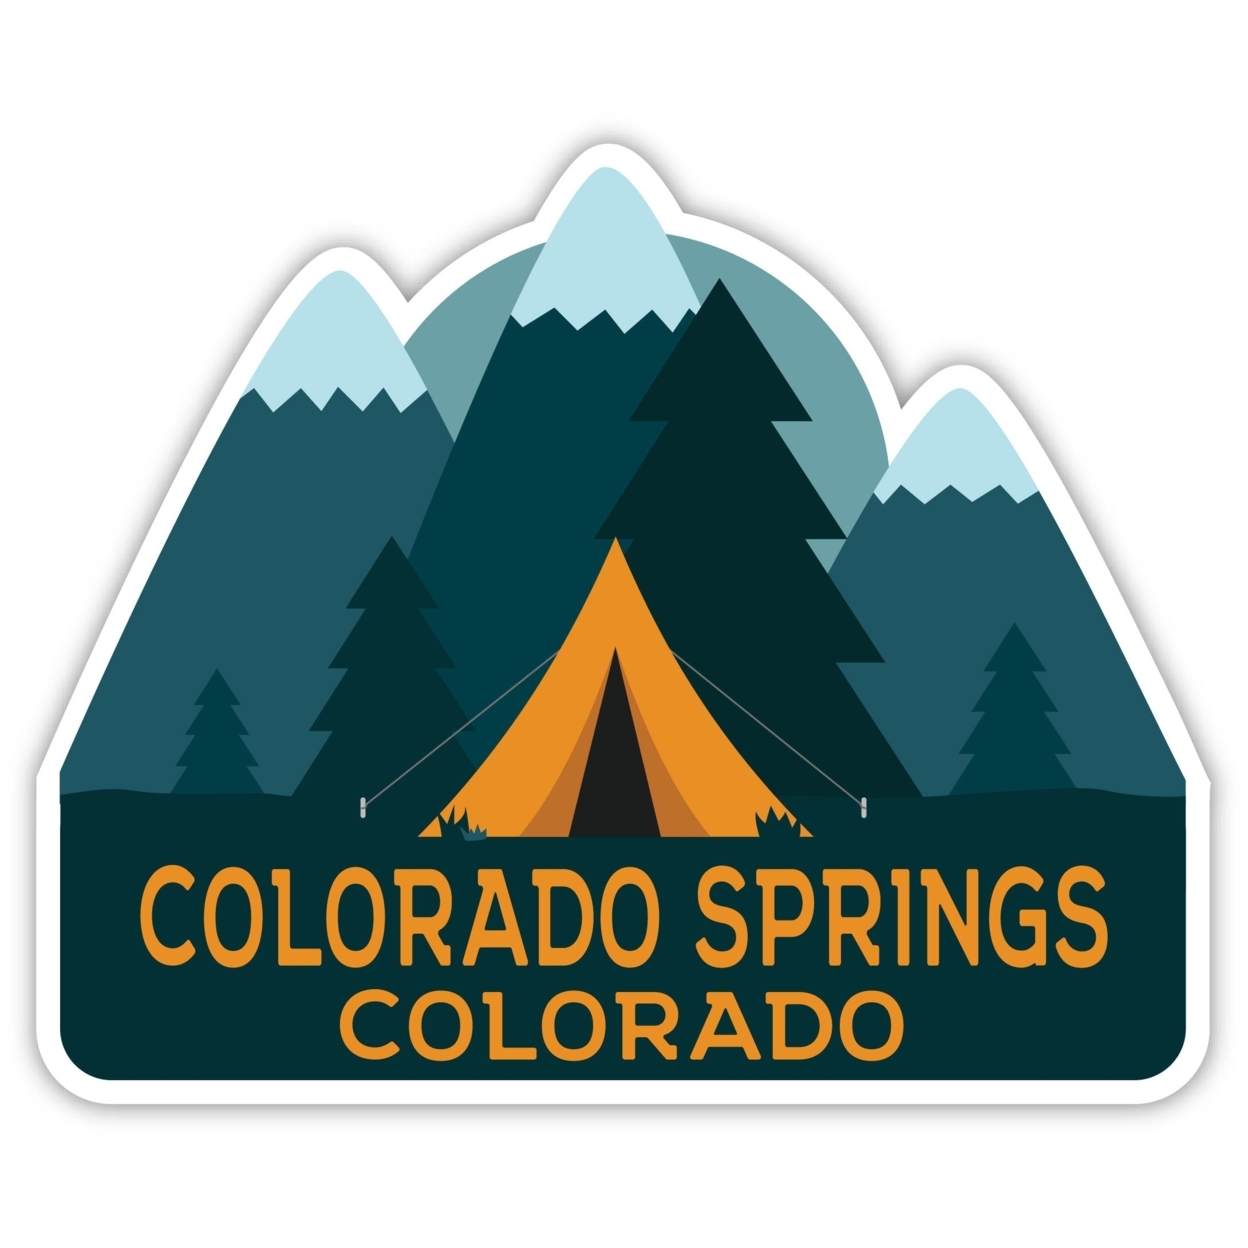 Colorado Springs Colorado Souvenir Decorative Stickers (Choose Theme And Size) - Single Unit, 8-Inch, Bear